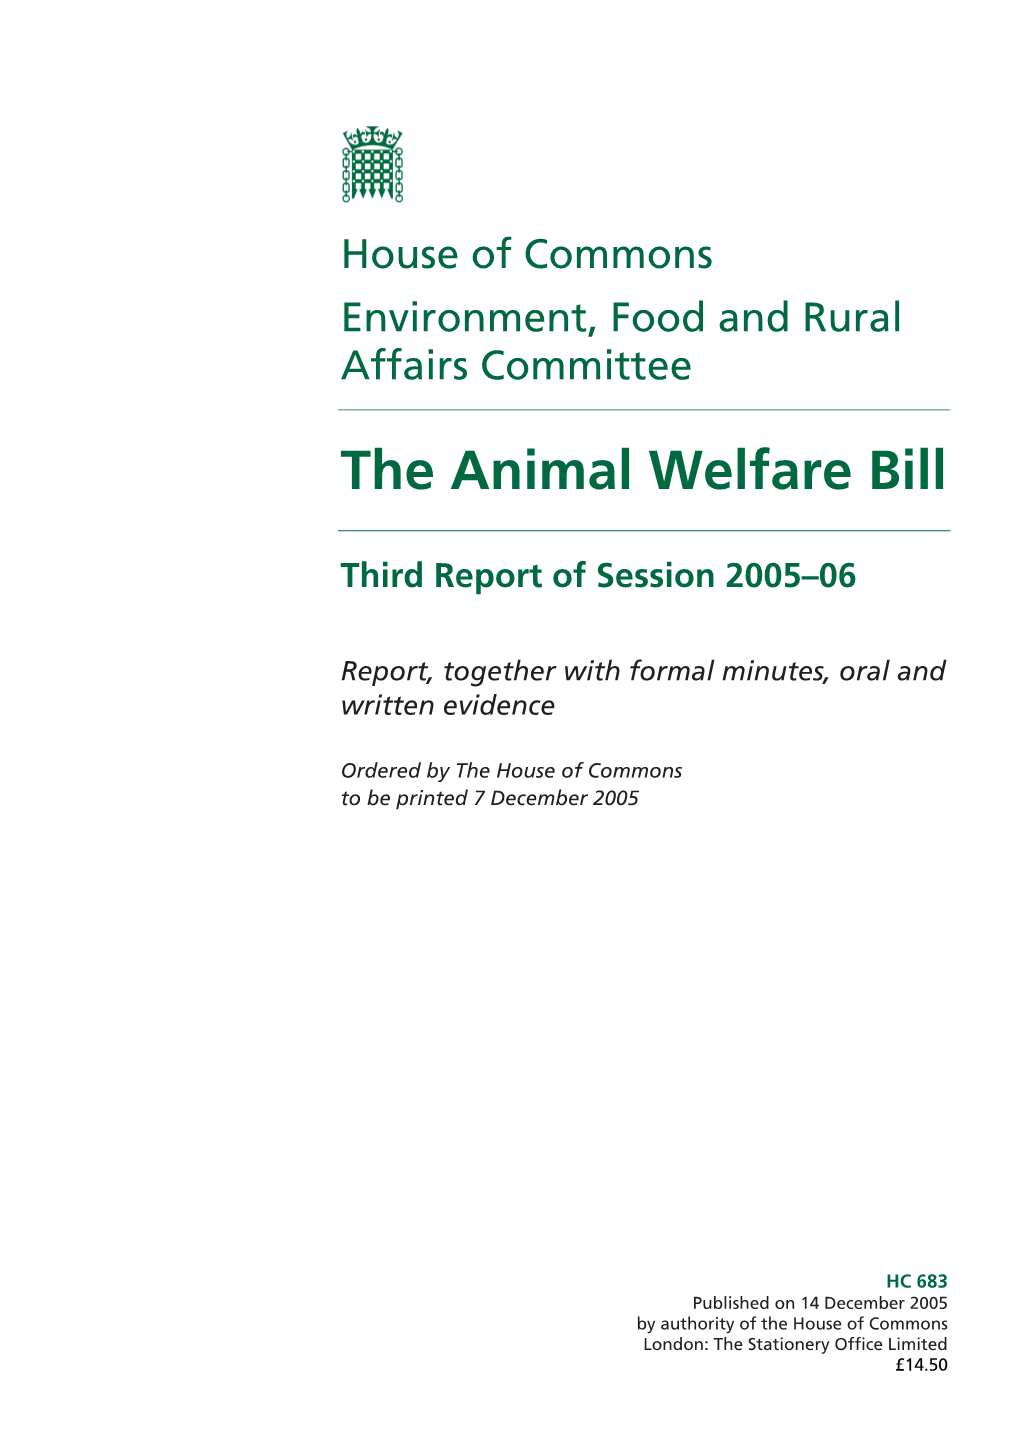 The Animal Welfare Bill